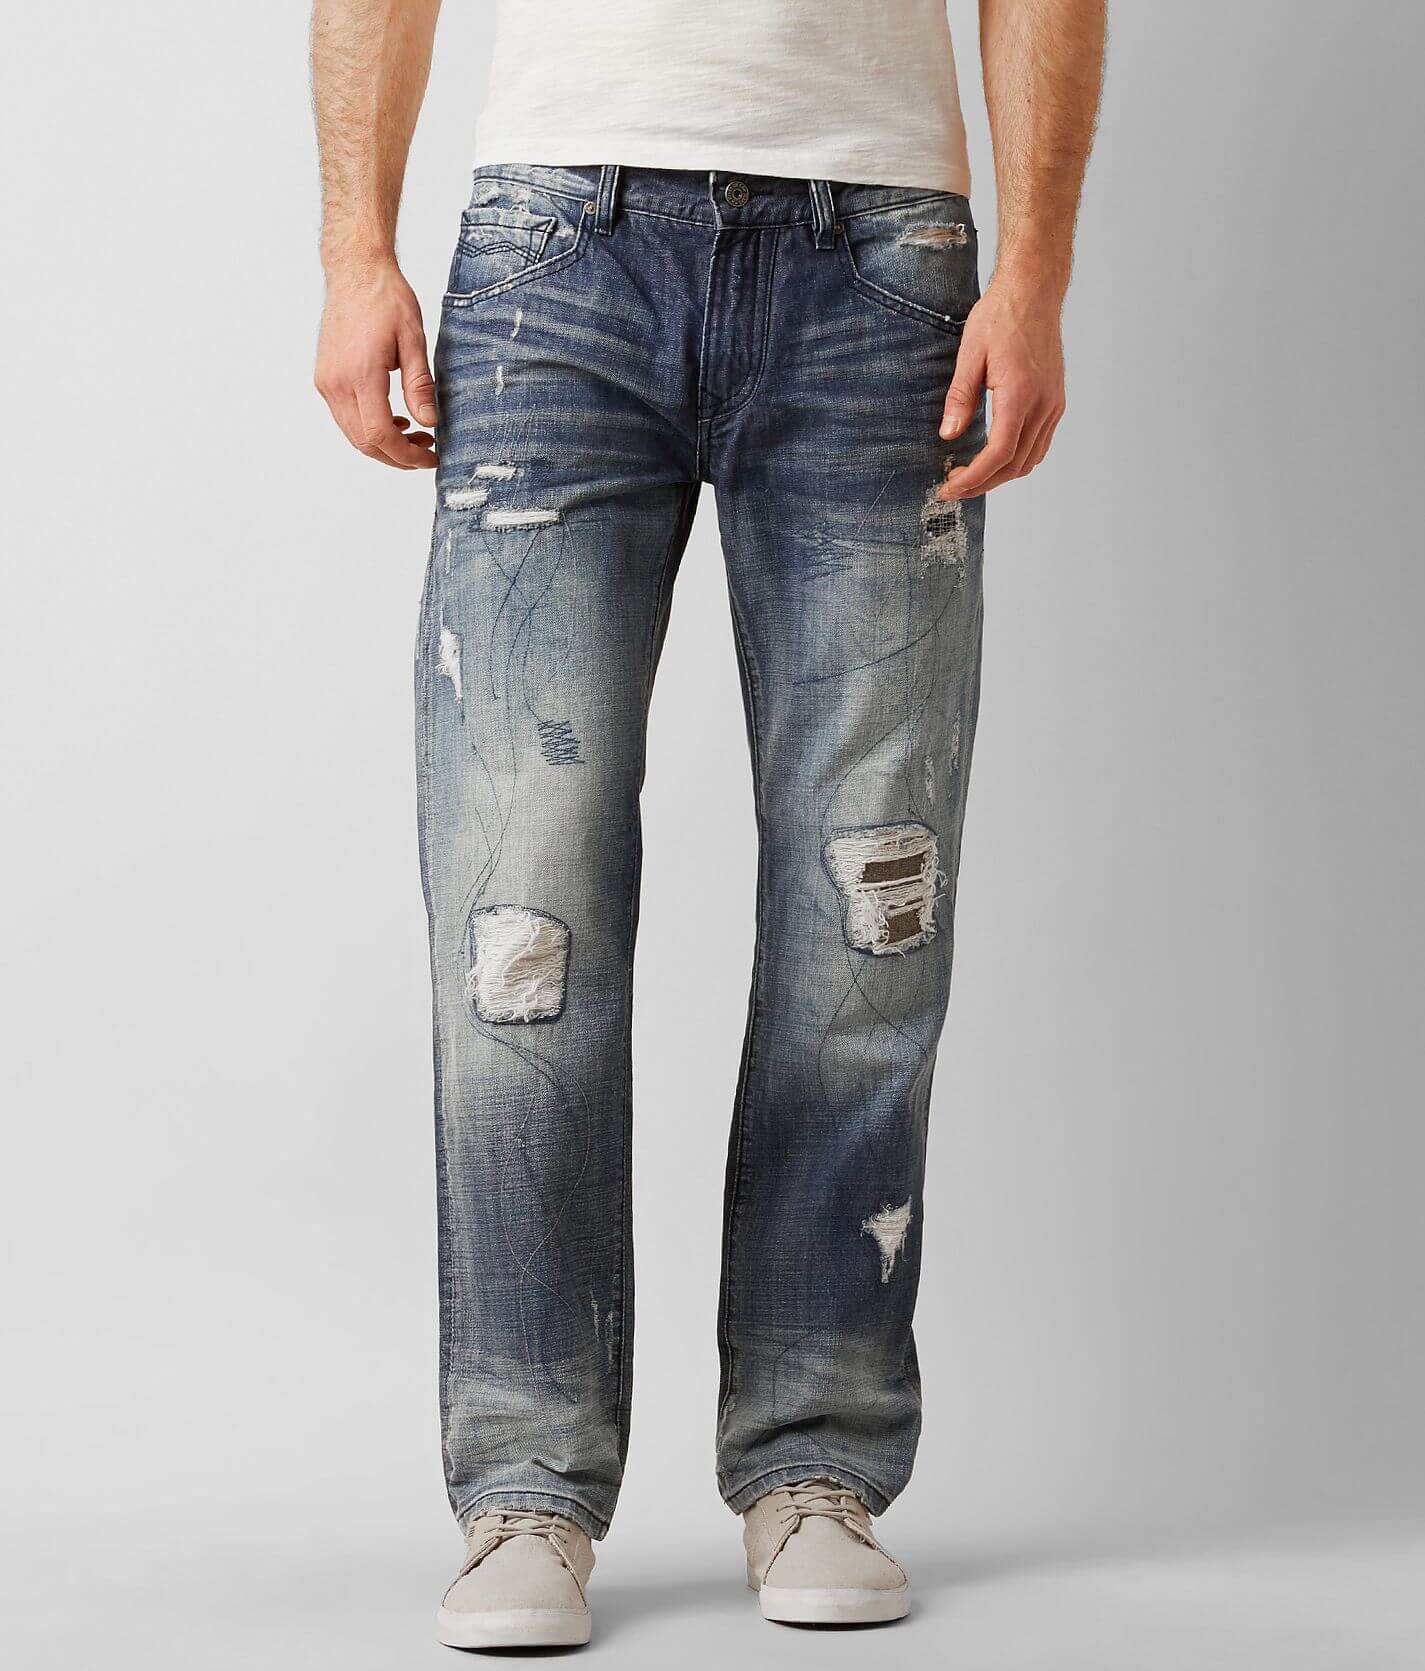 Rivet jeans - .de